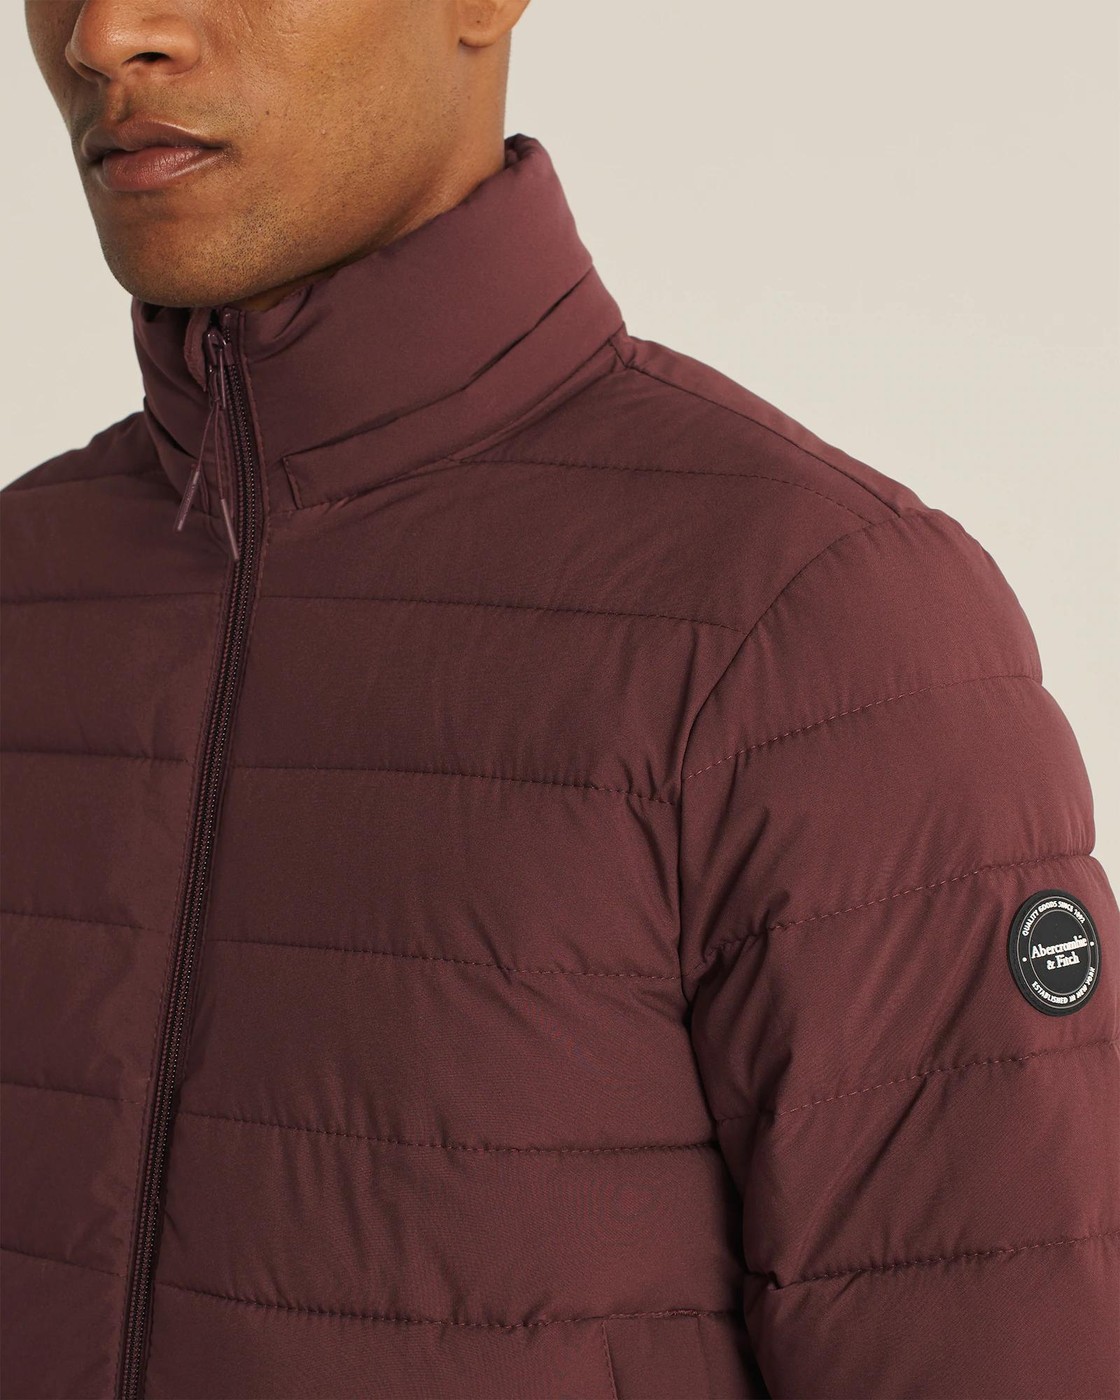 Куртка демисезонная - мужская куртка Abercrombie & Fitch, S, S